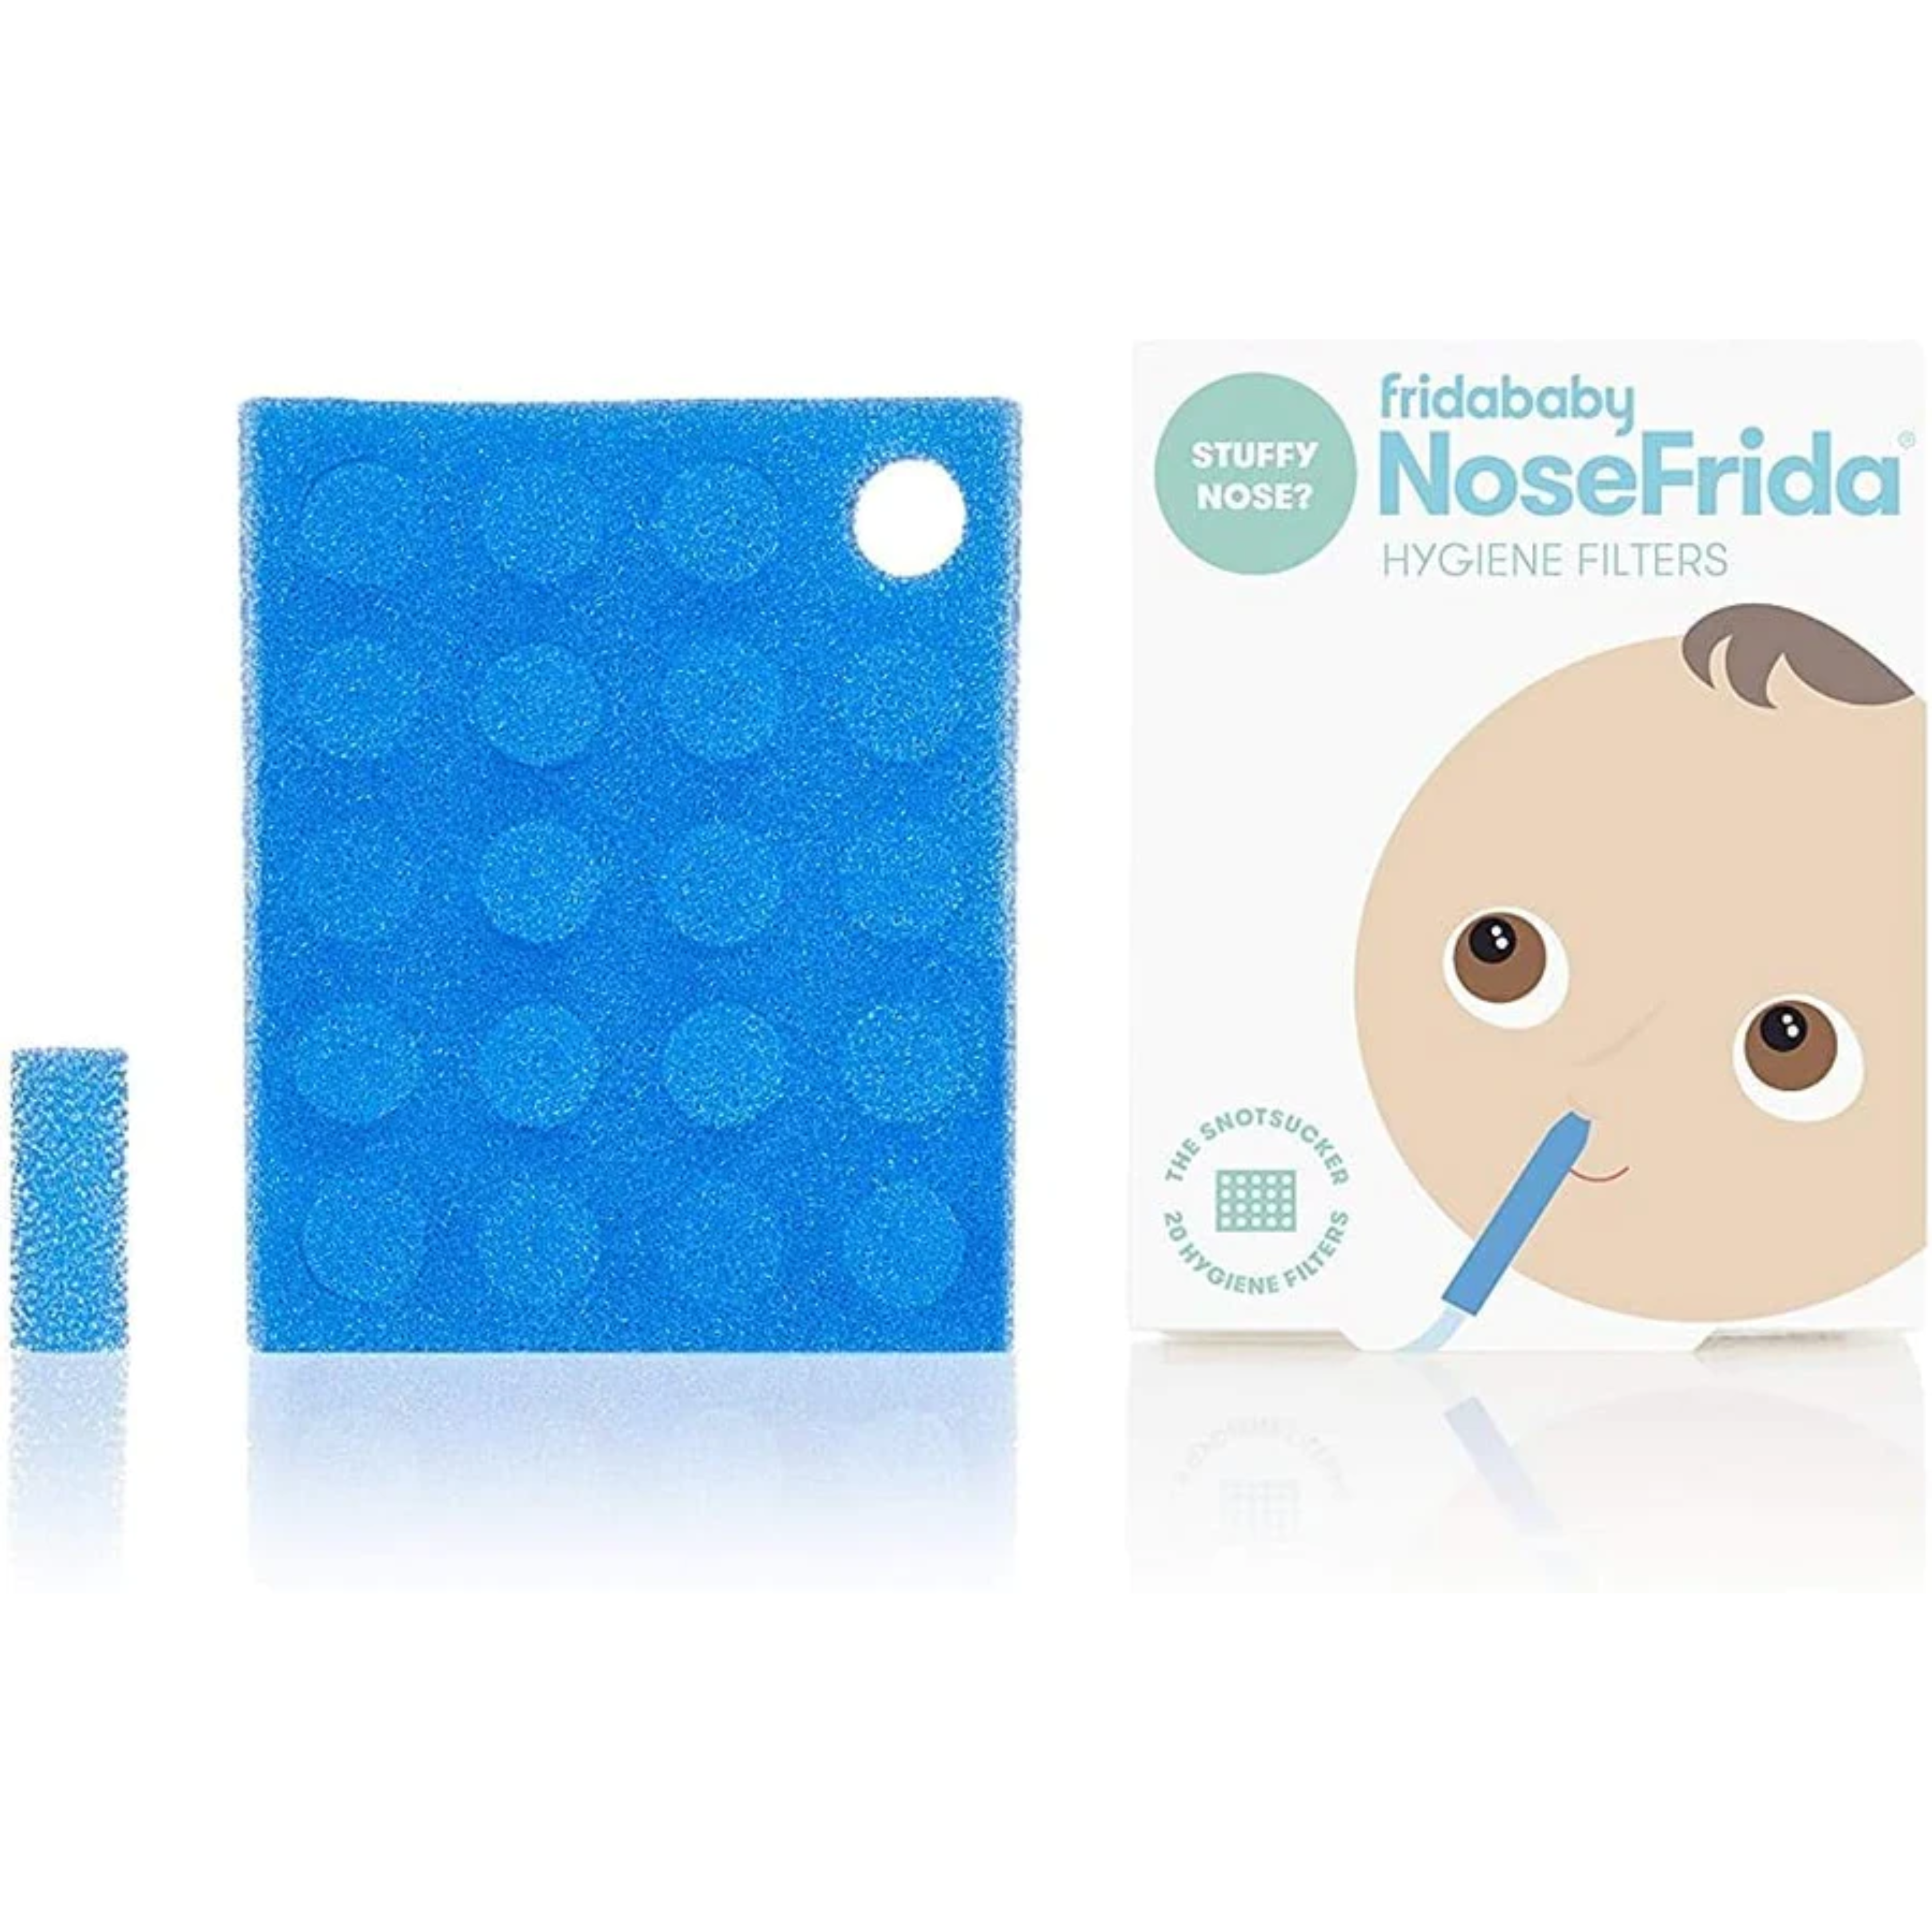 Fridababy - NoseFrida Hygiene Filters